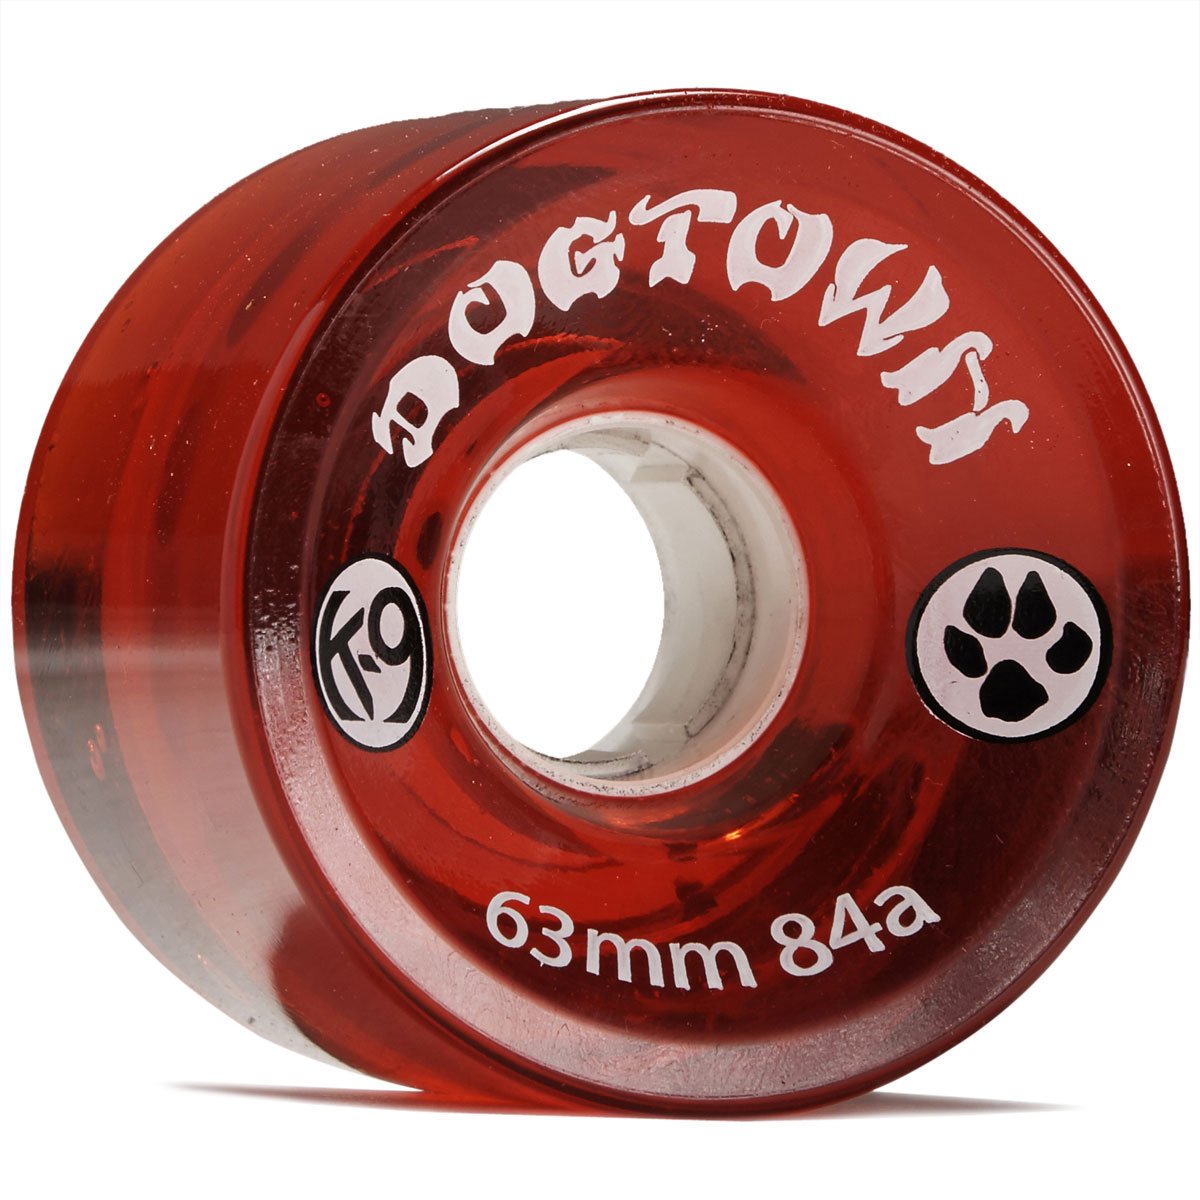 Dogtown K-9 Cruiser 84a Skateboard Wheels - Clear Red - 63mm